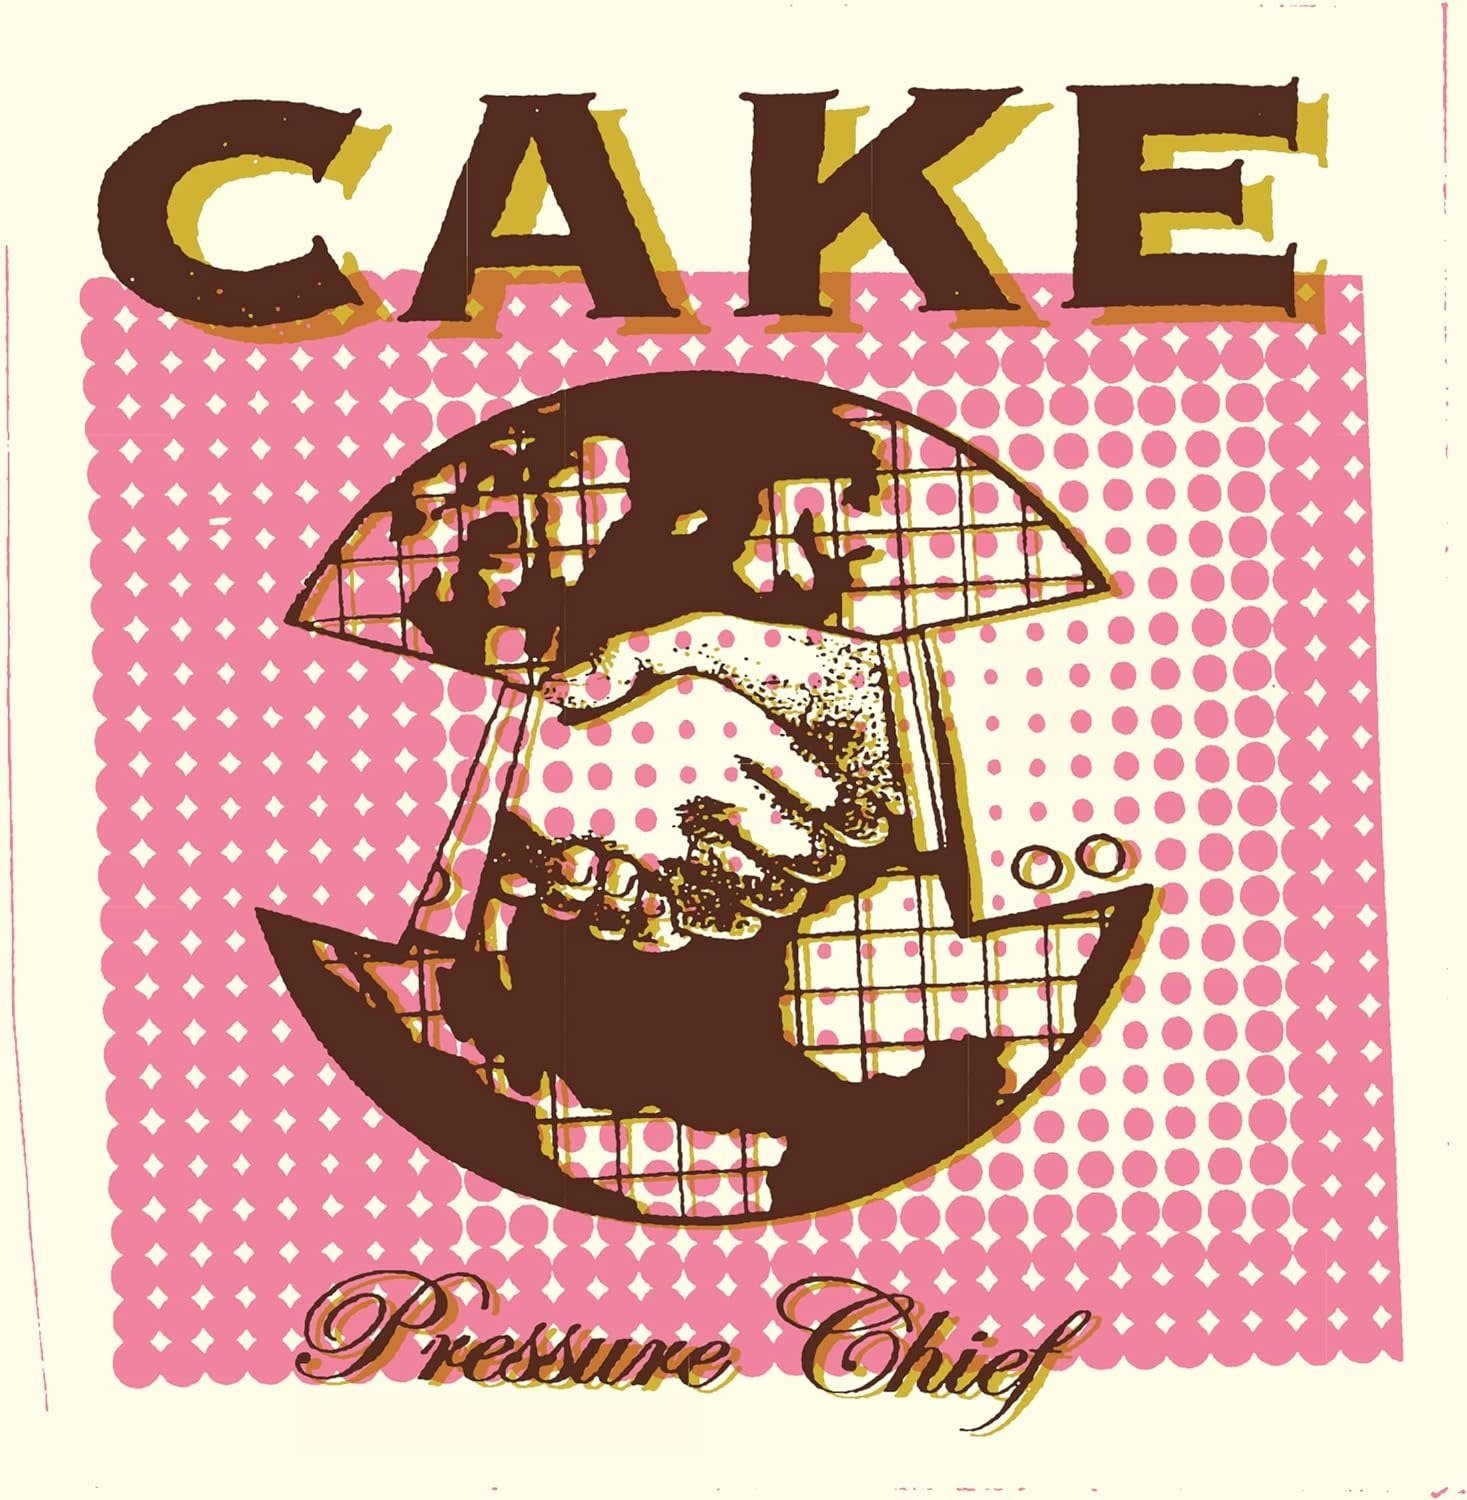 Cake - Pressure Chief